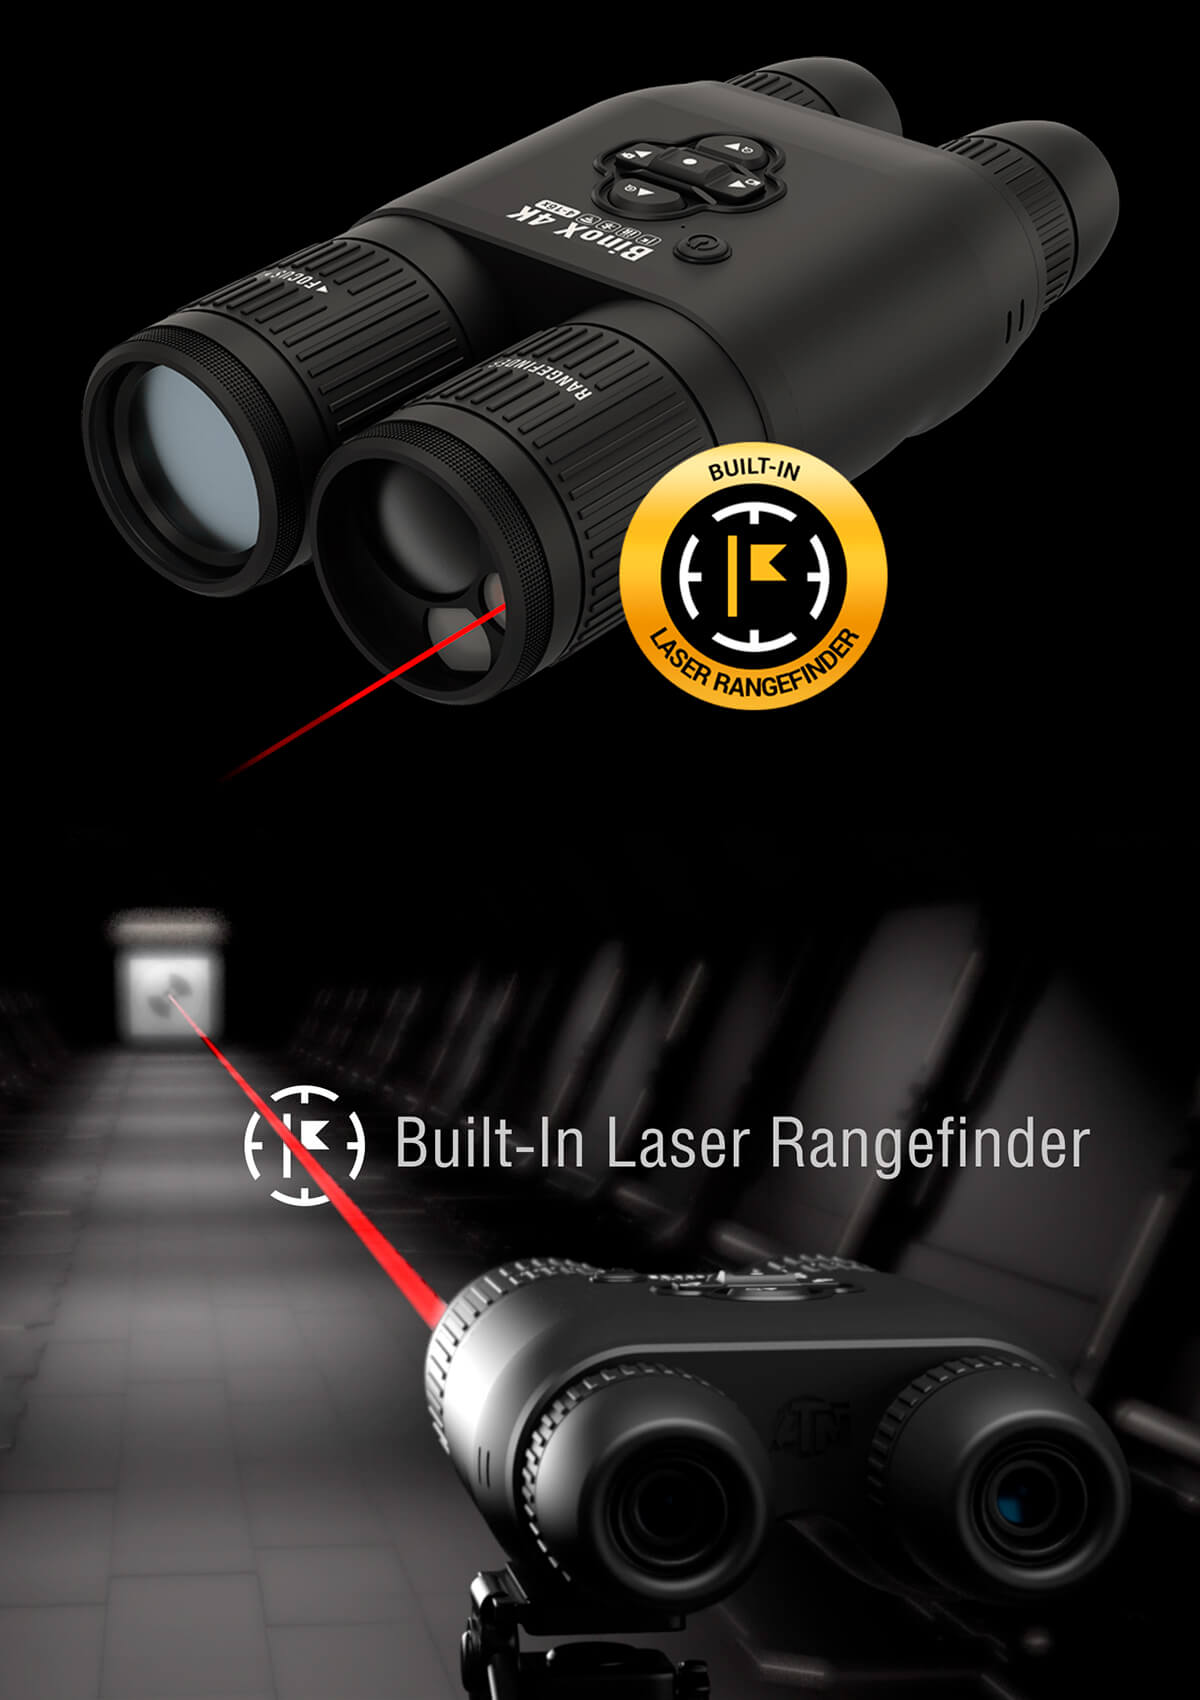 The Best Range Finding Binoculars from ATN Corp